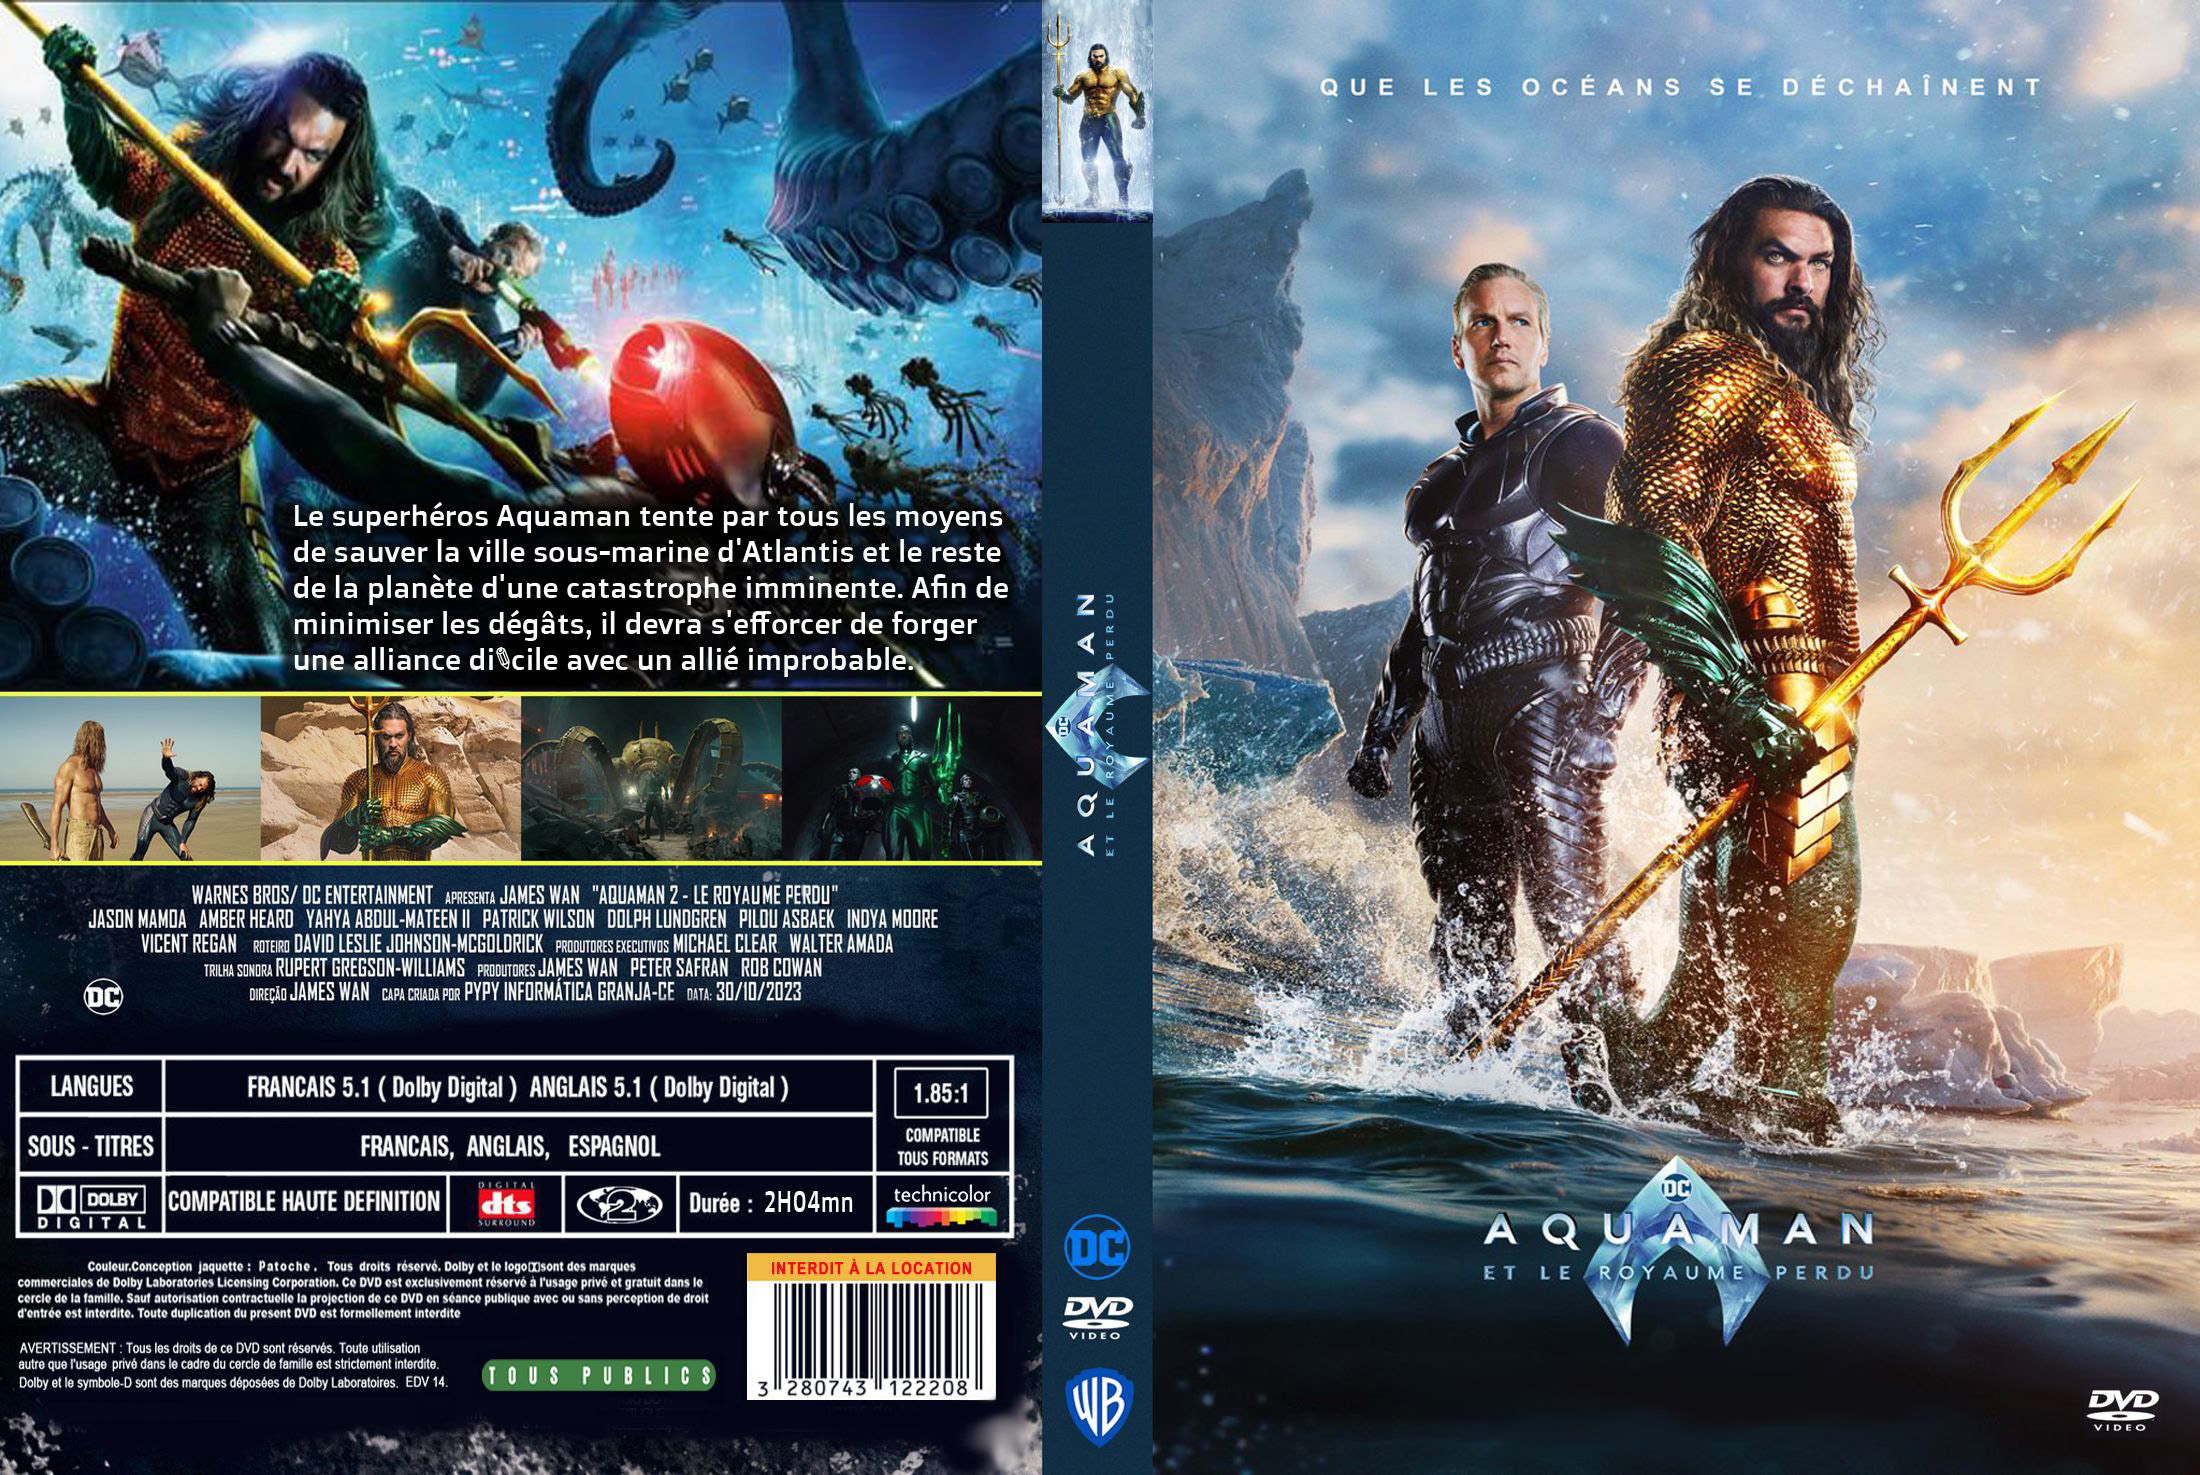 Jaquette DVD Aquaman et le Royaume perdu custom